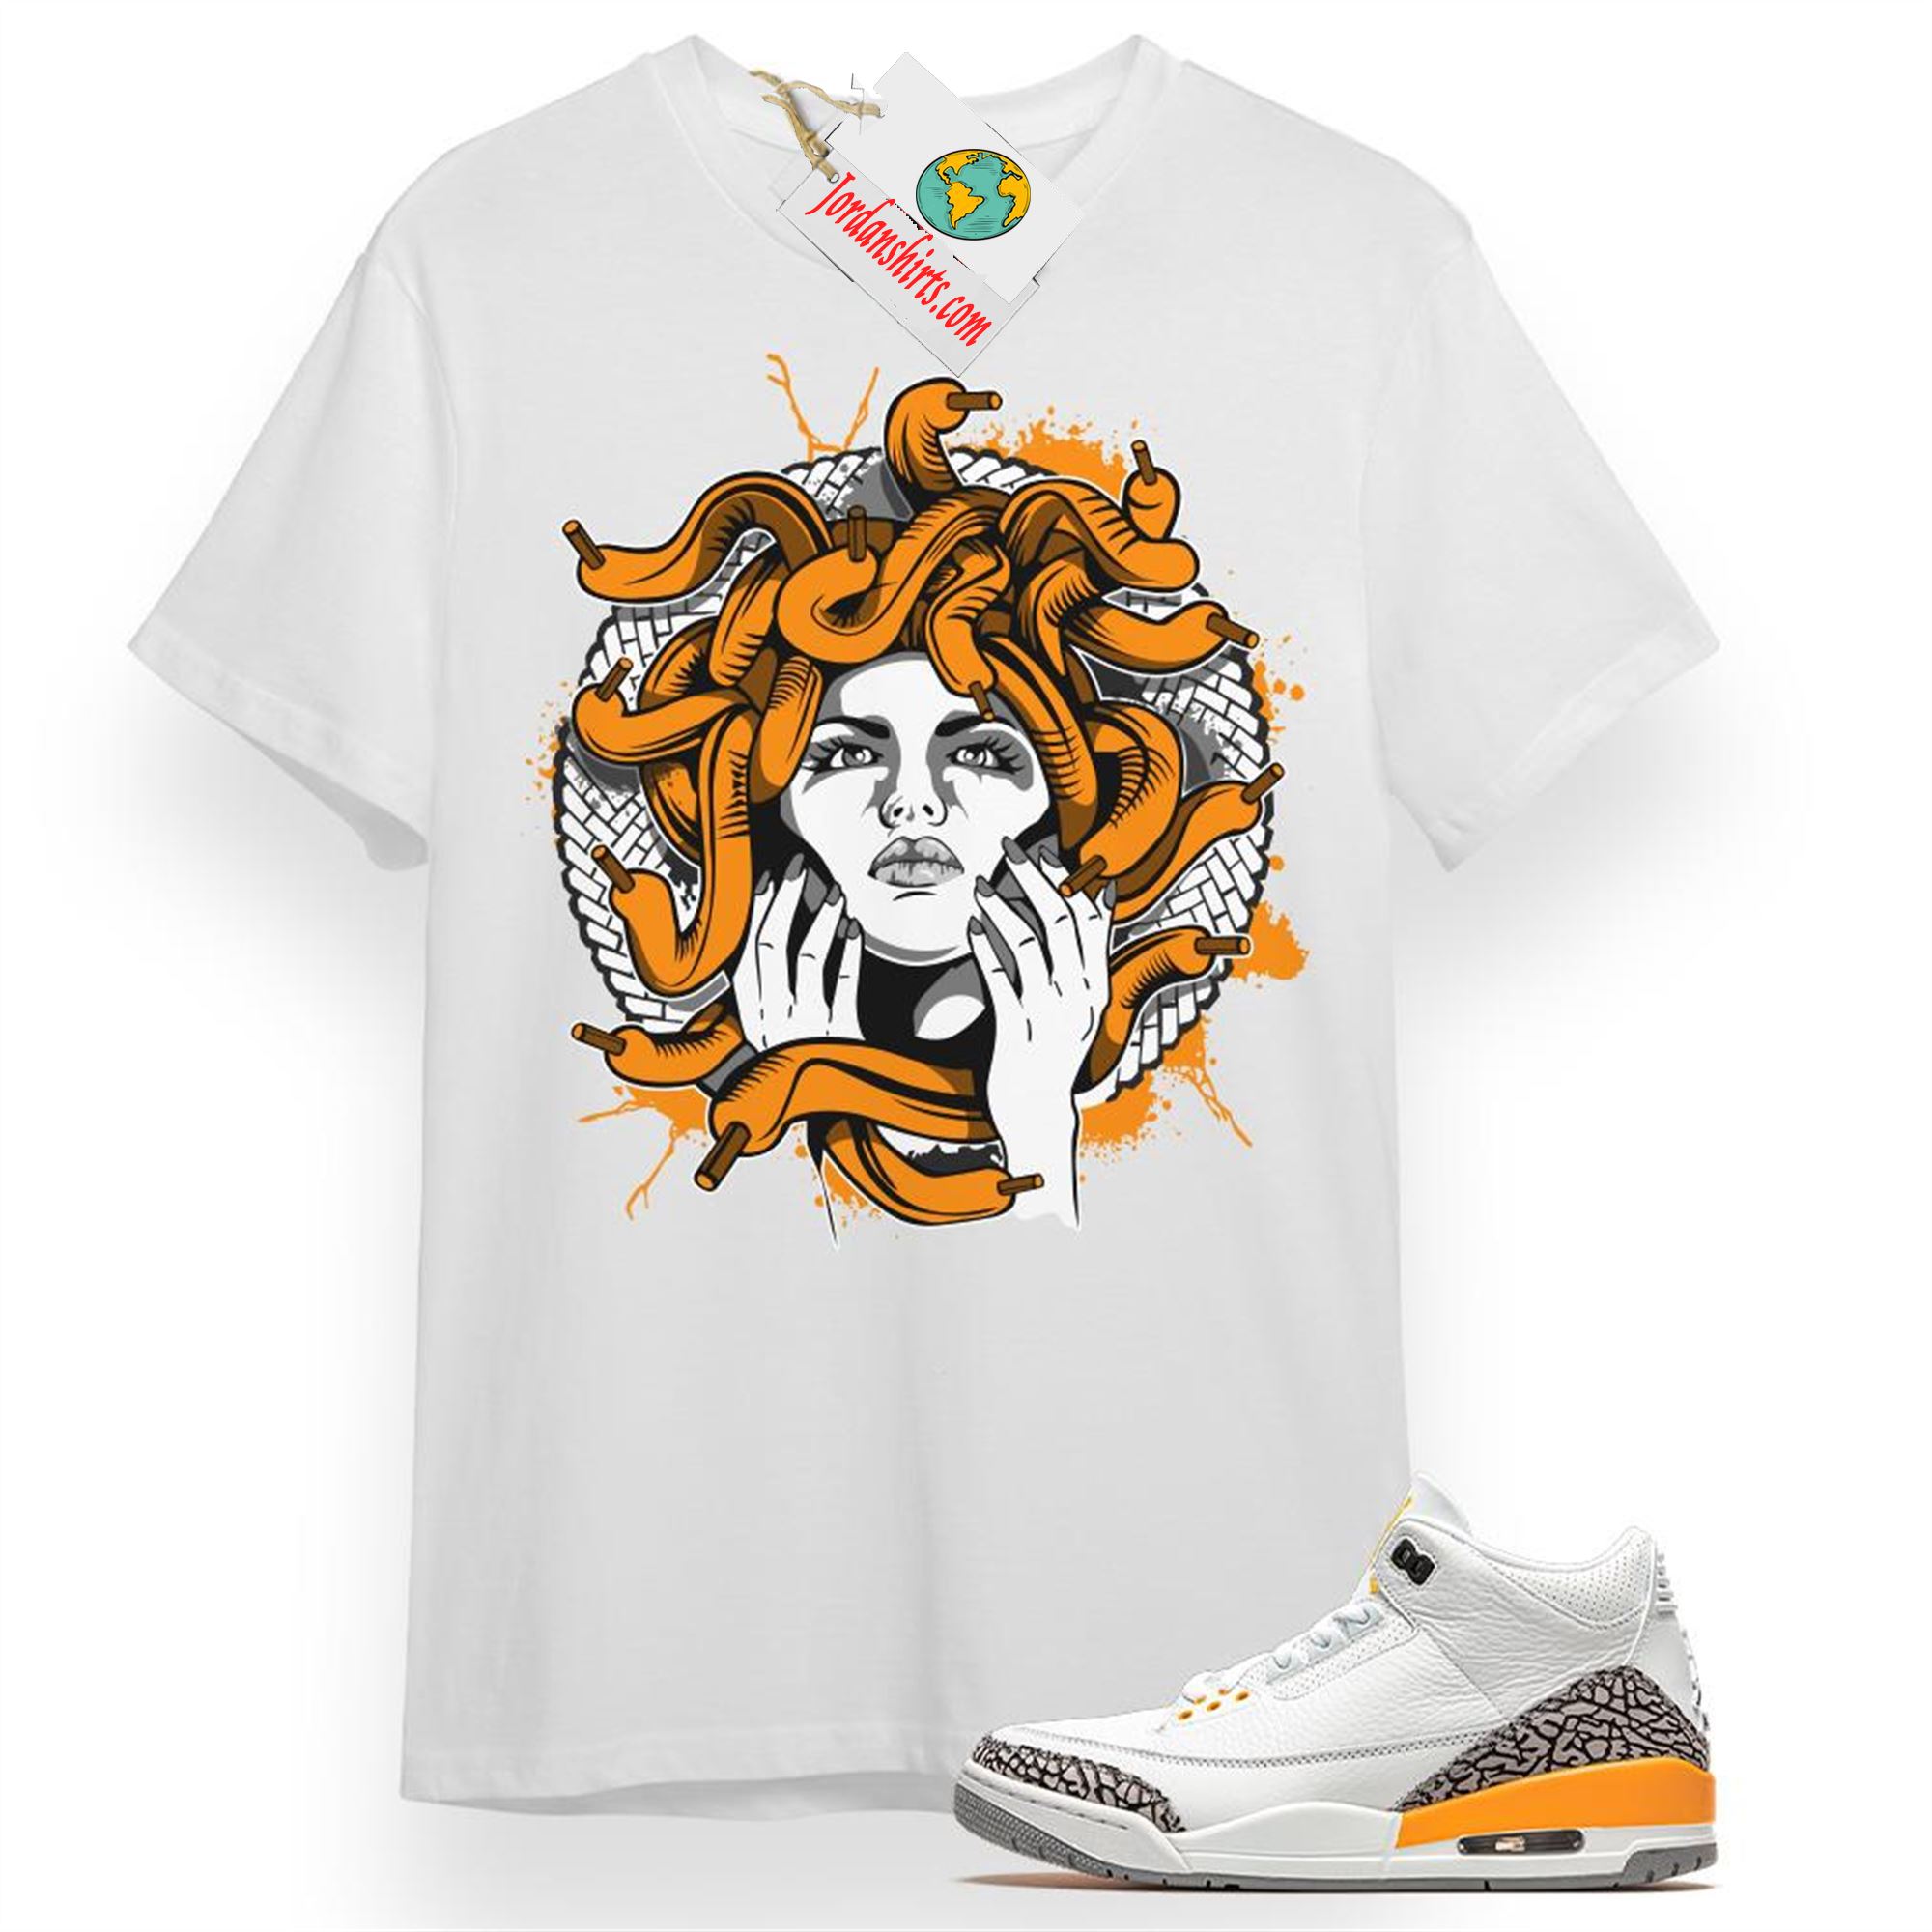 Jordan 3 Shirt, Medusa White T-shirt Air Jordan 3 Laser Orange 3s Full Size Up To 5xl